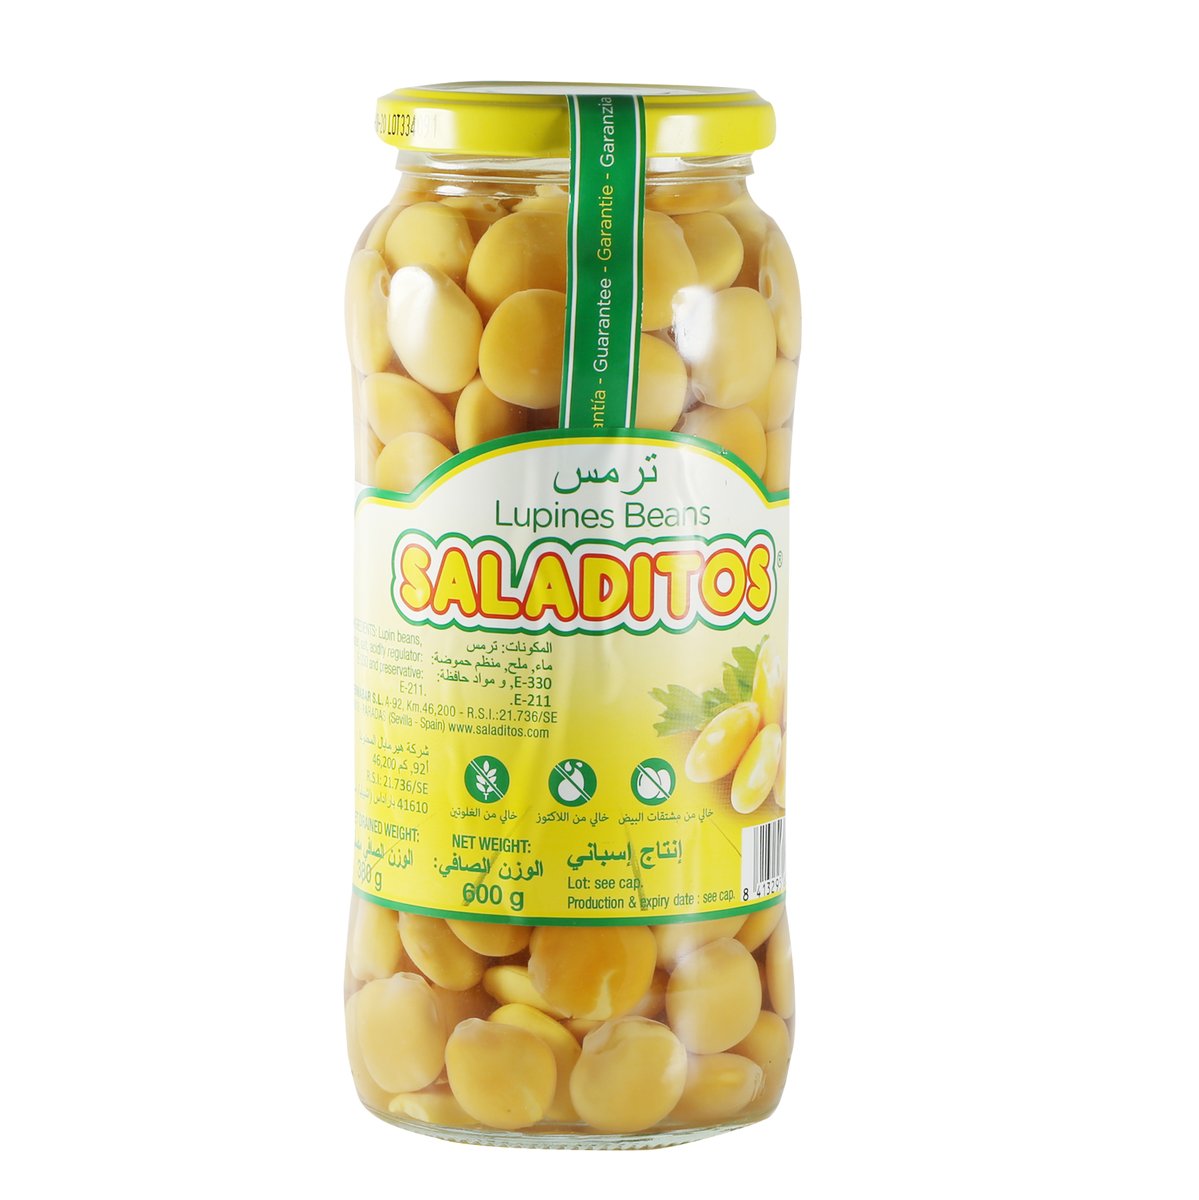 Saladitos Lupine Beans 600 g